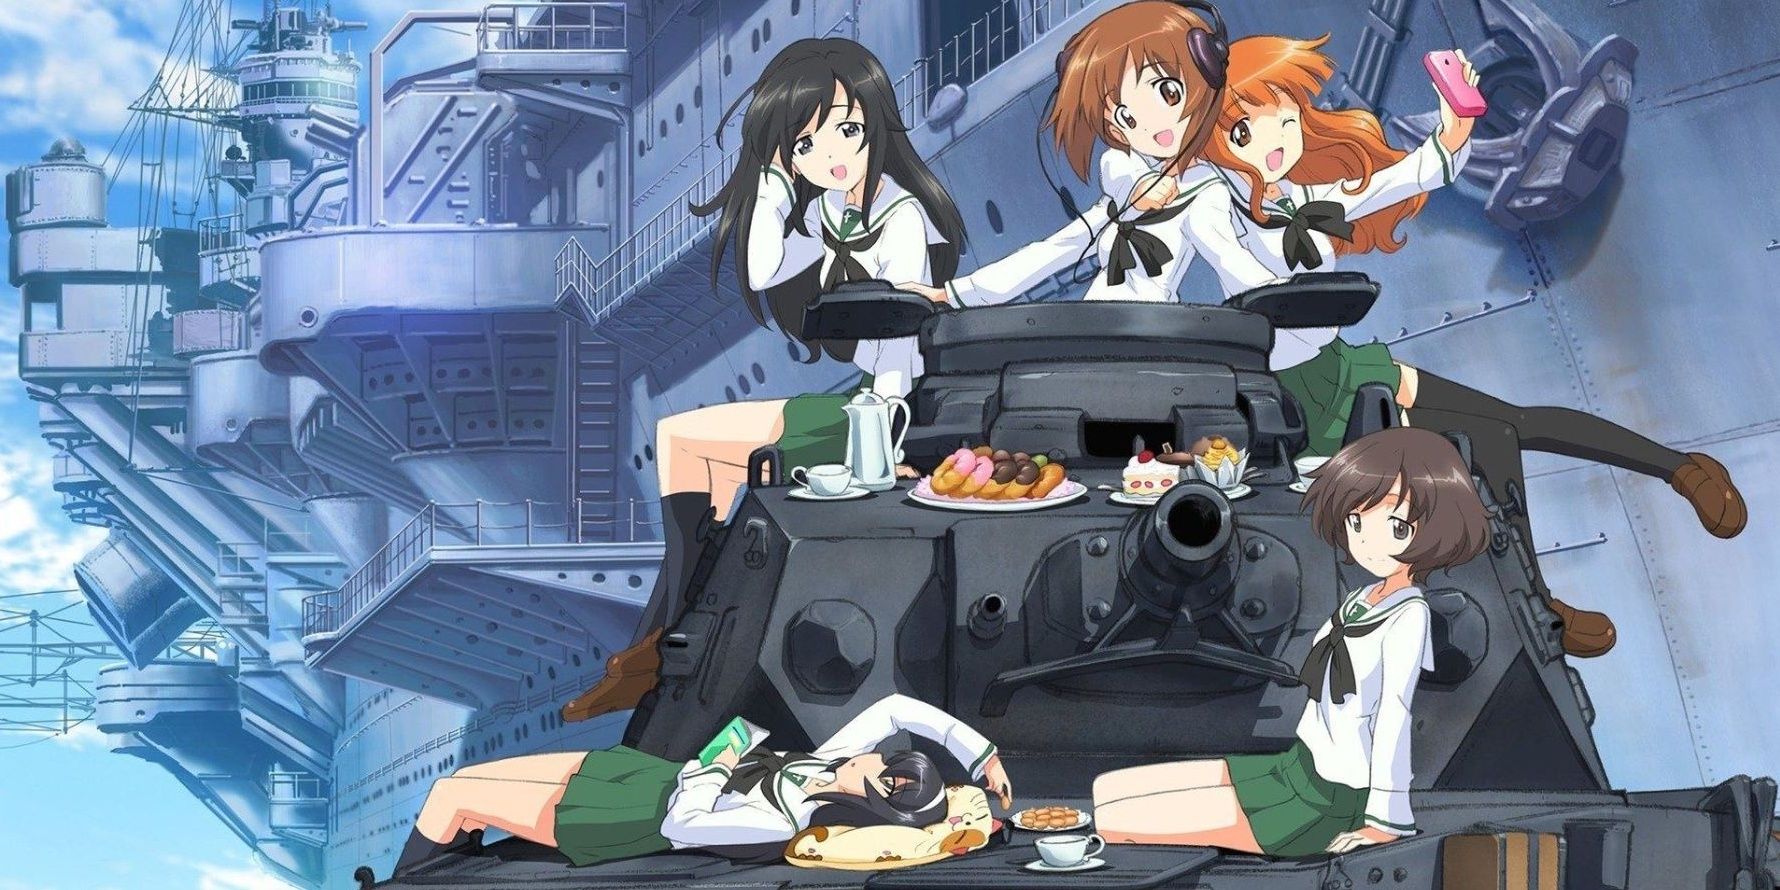 Five girls from Girls und Panzer sitting on a tank